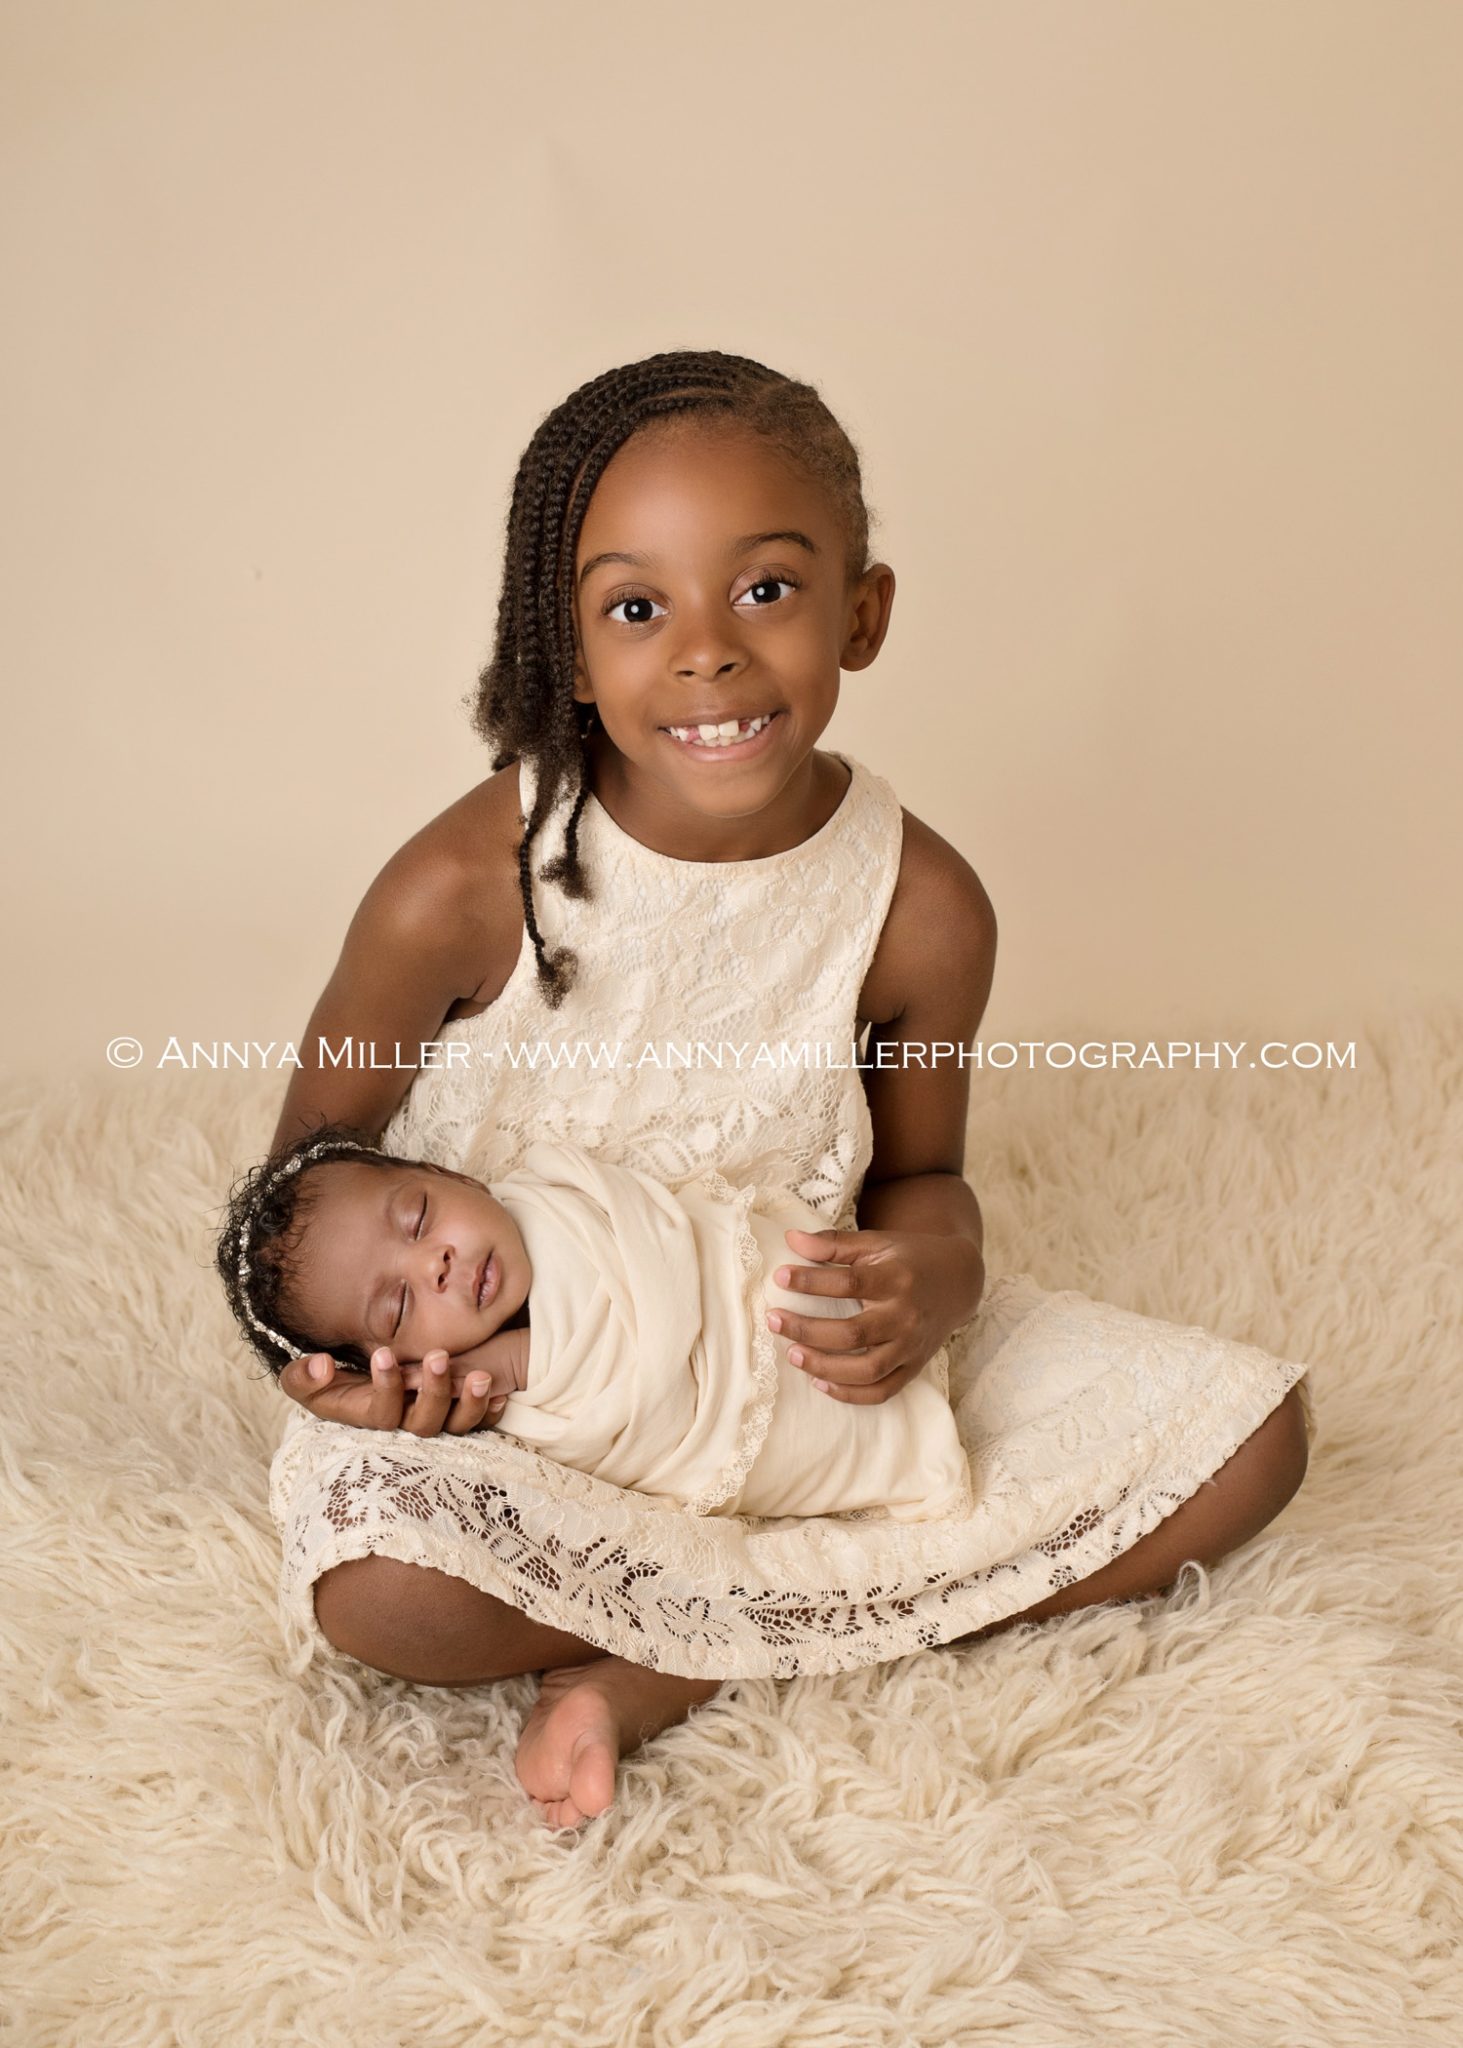 Newborn portraits by local newborn photographer Annya Miller 